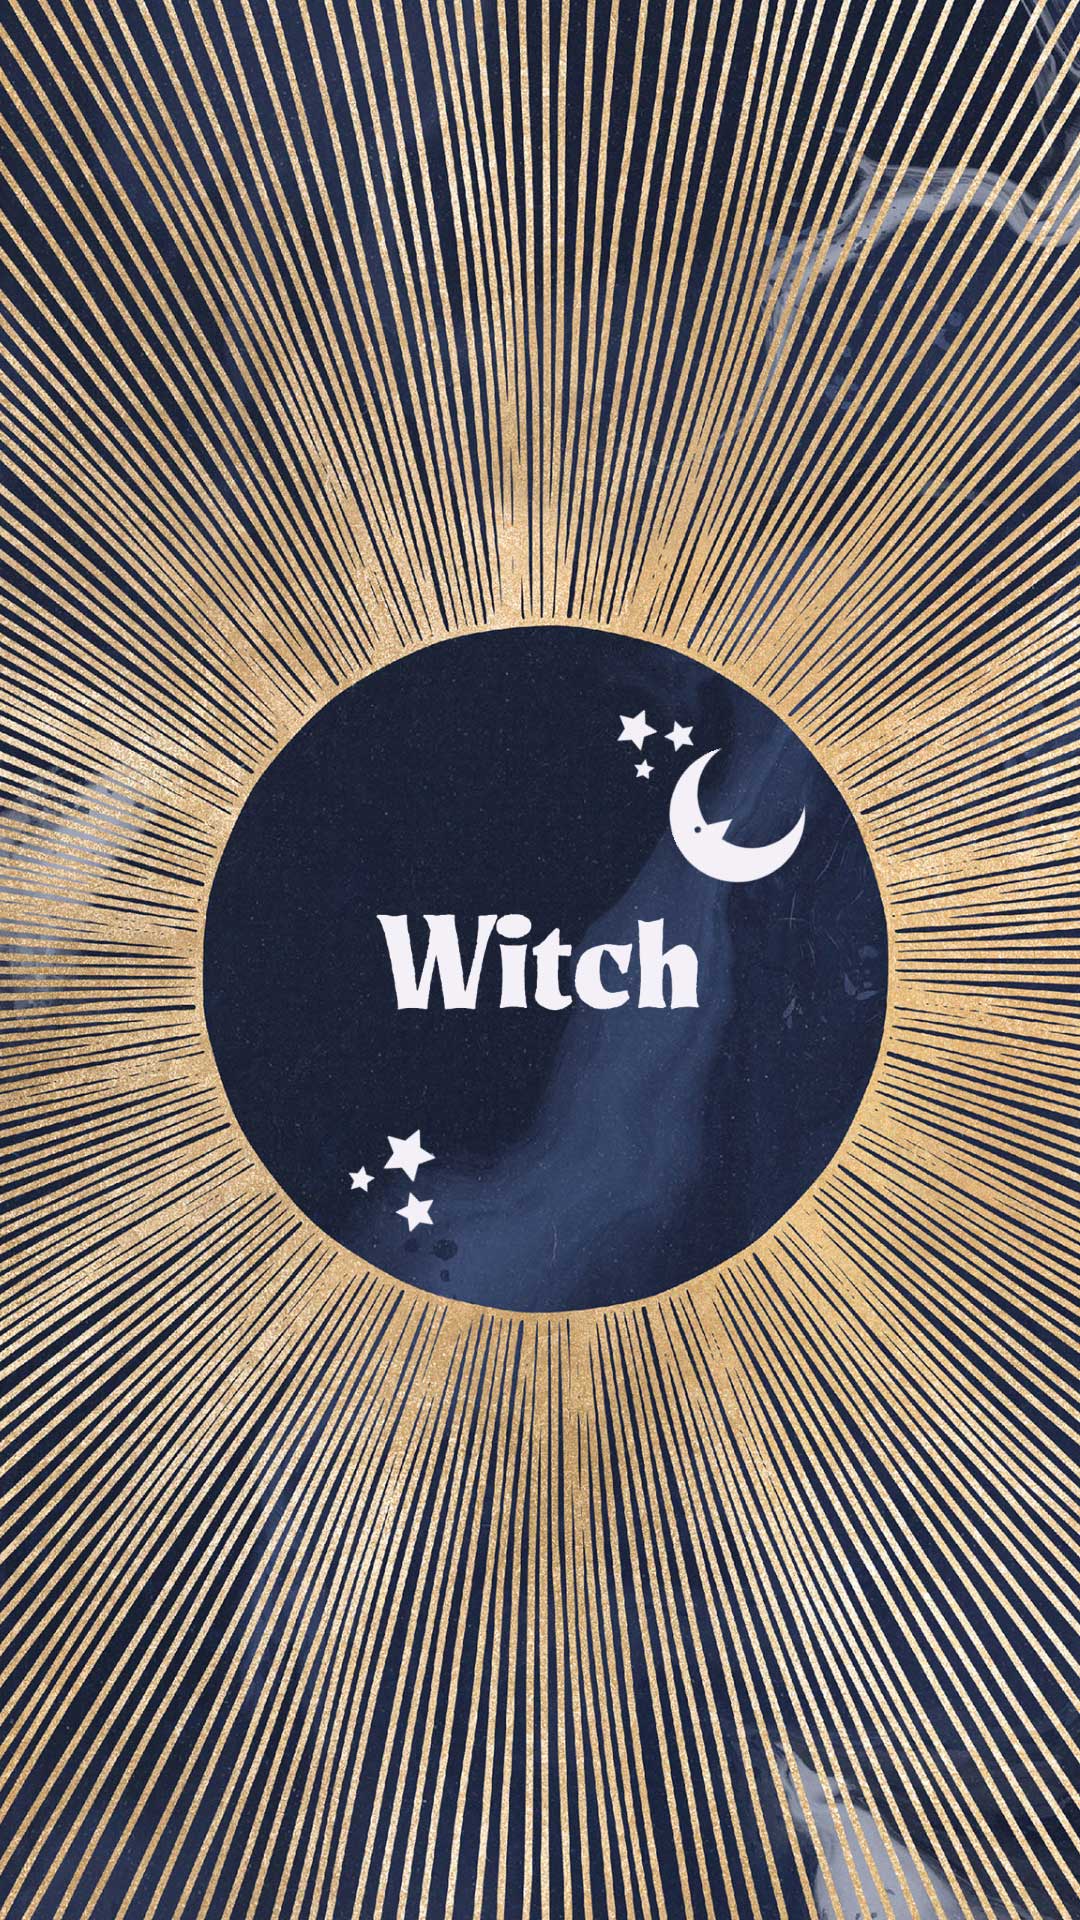 Witch celestial zodiac phone wallpaper